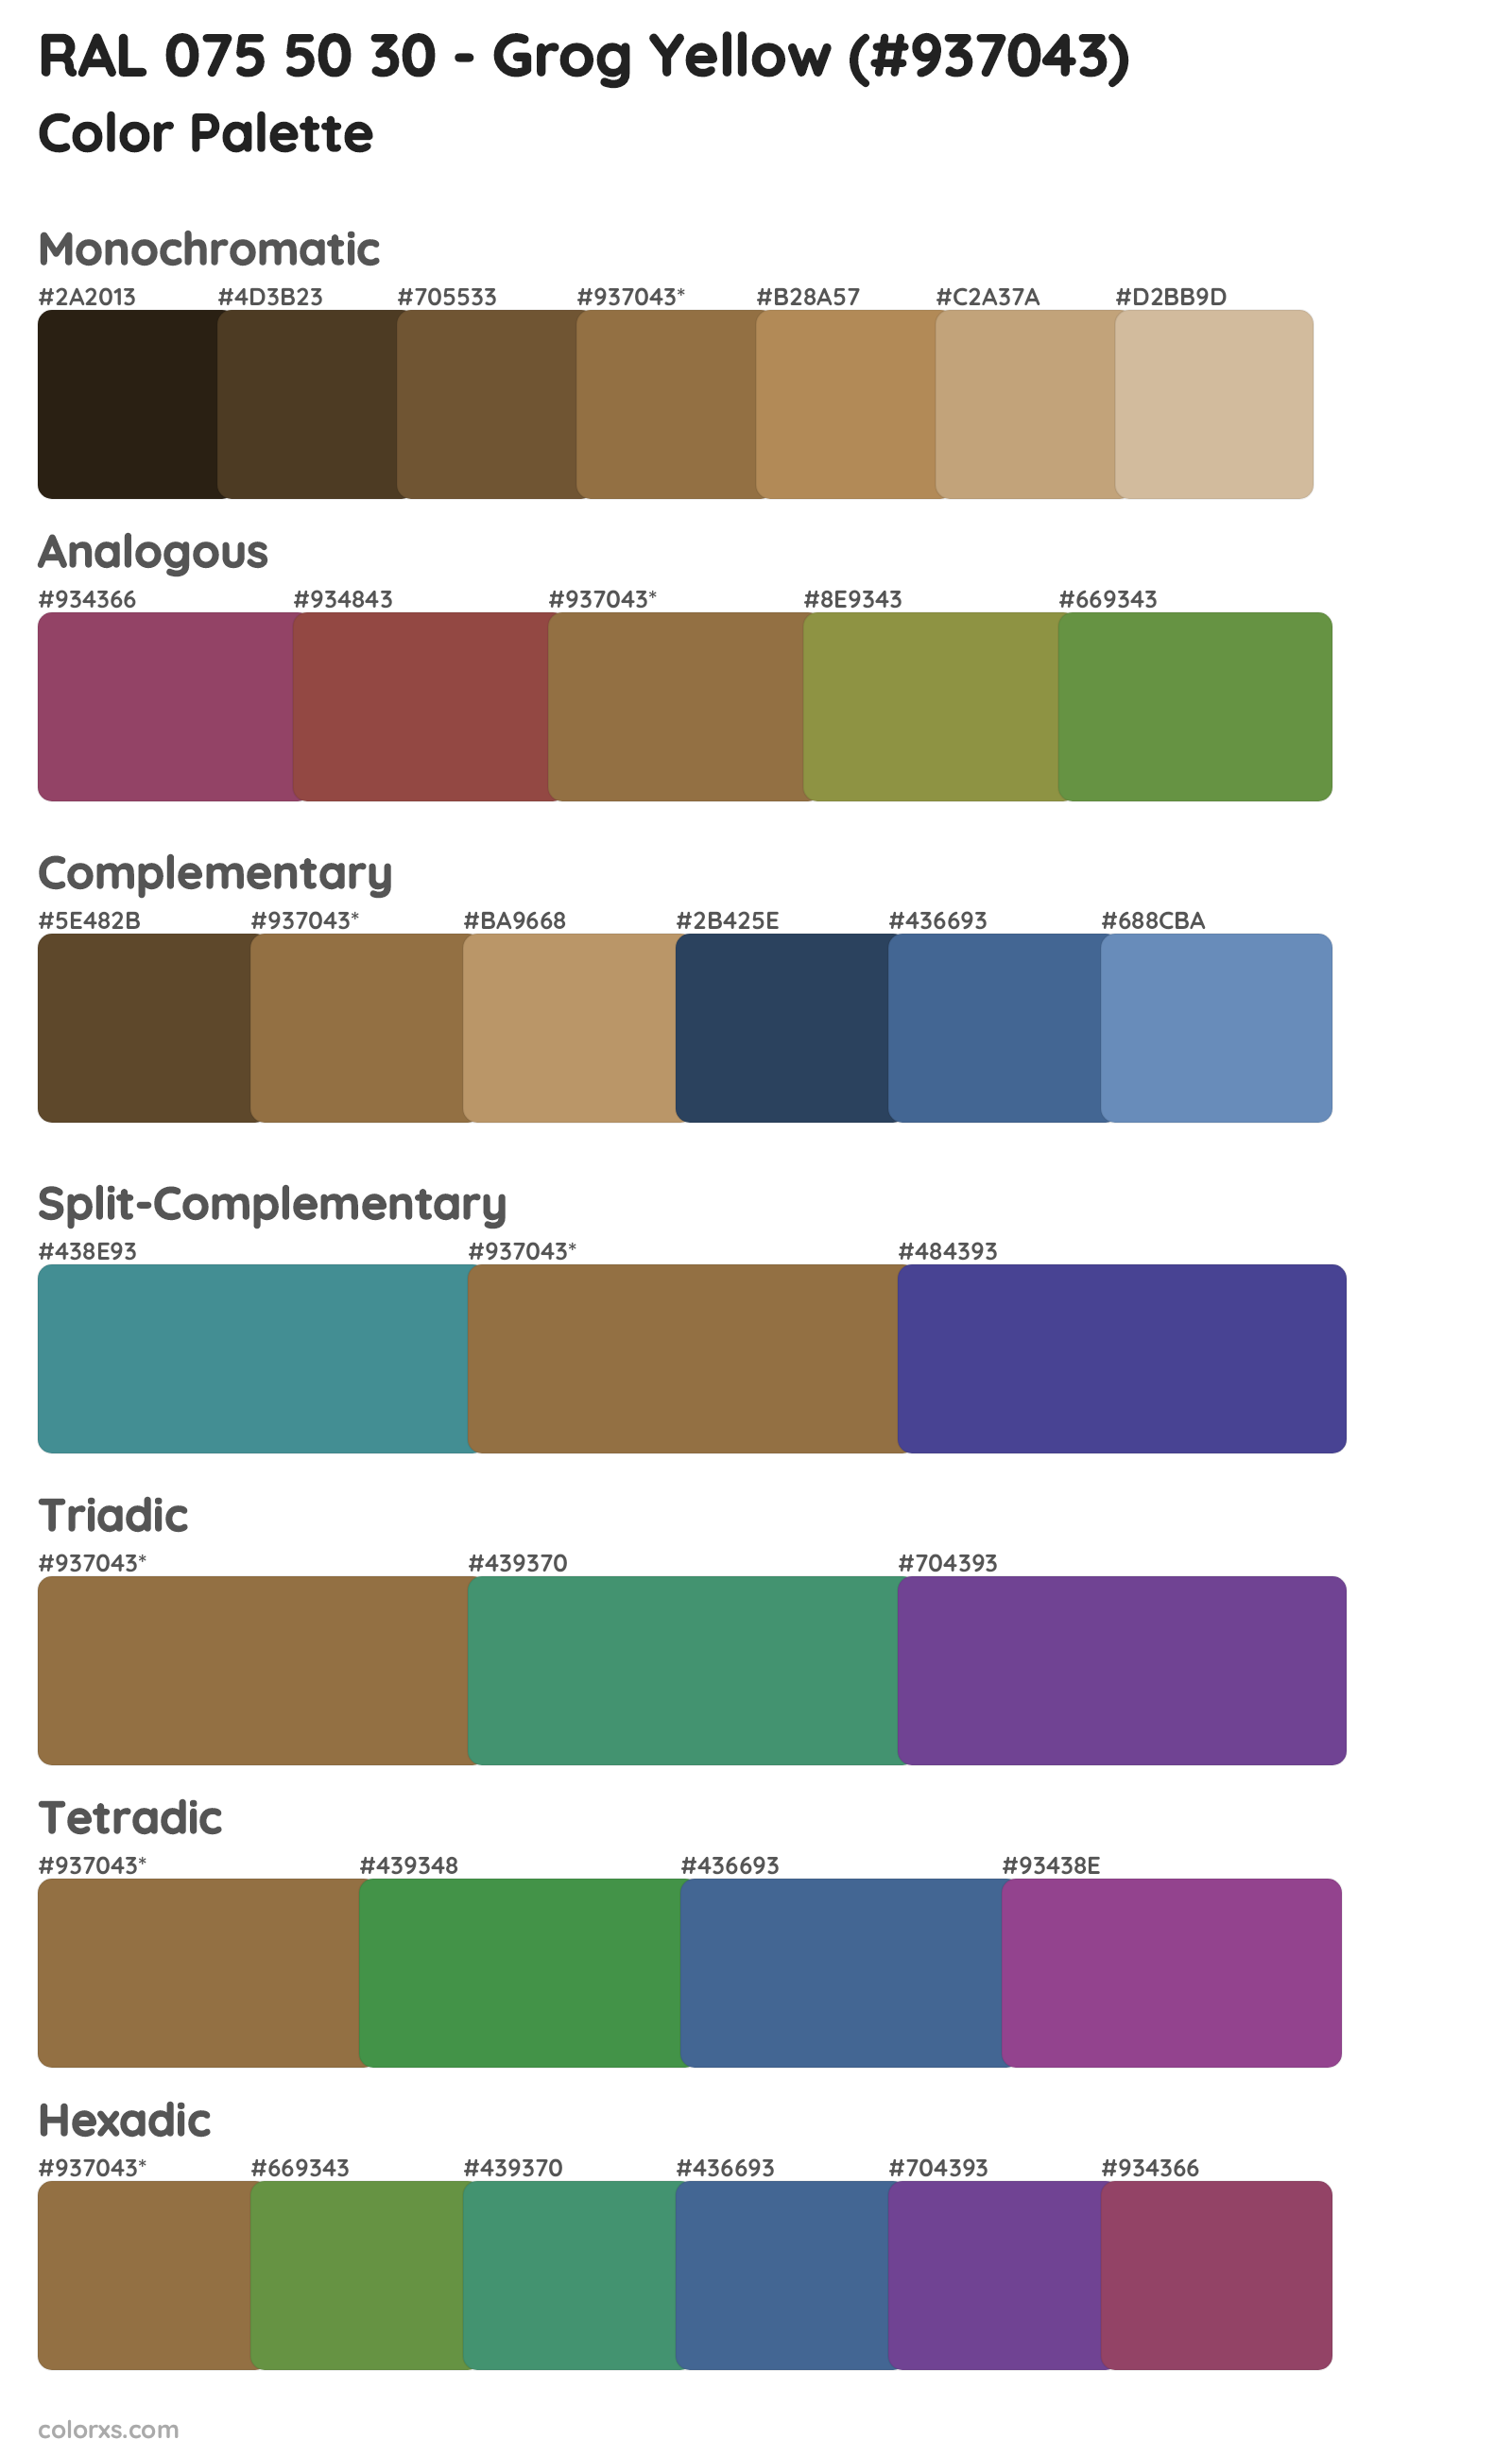 RAL 075 50 30 - Grog Yellow Color Scheme Palettes